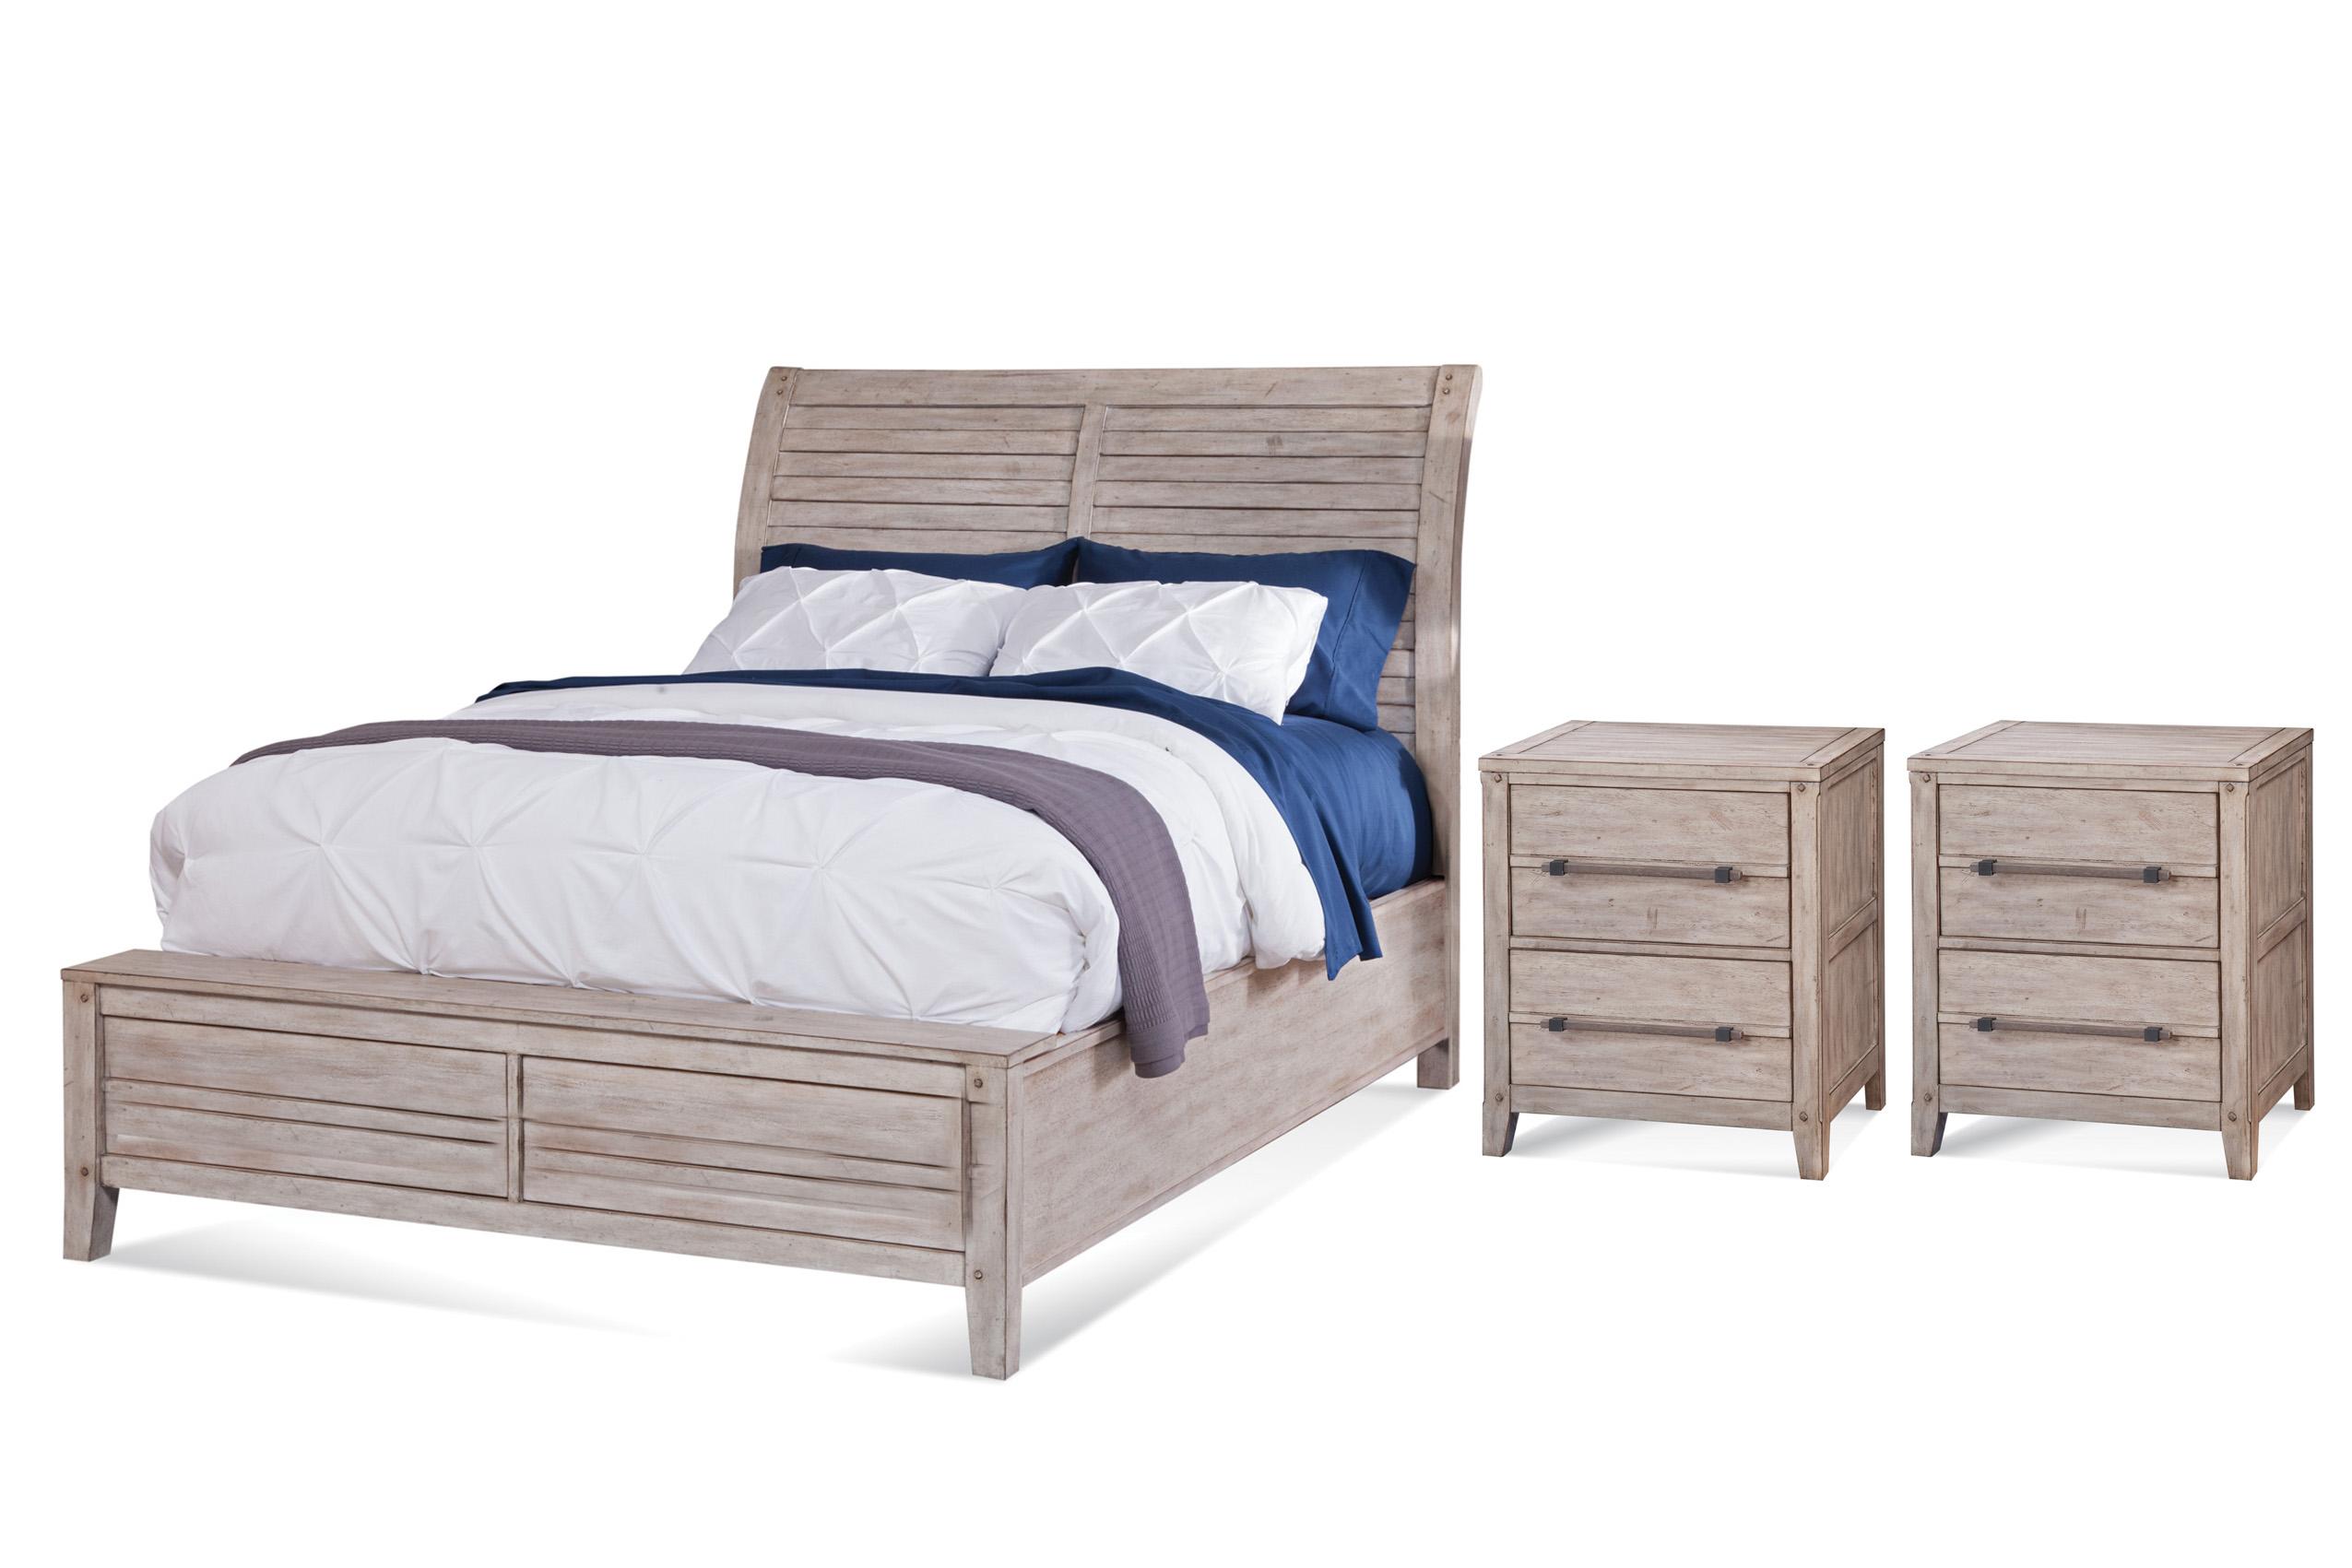 Classic, Traditional Sleigh Bedroom Set AURORA 2810-50SLP 2810-50SLP-2810-420-2N-3PC in whitewash 